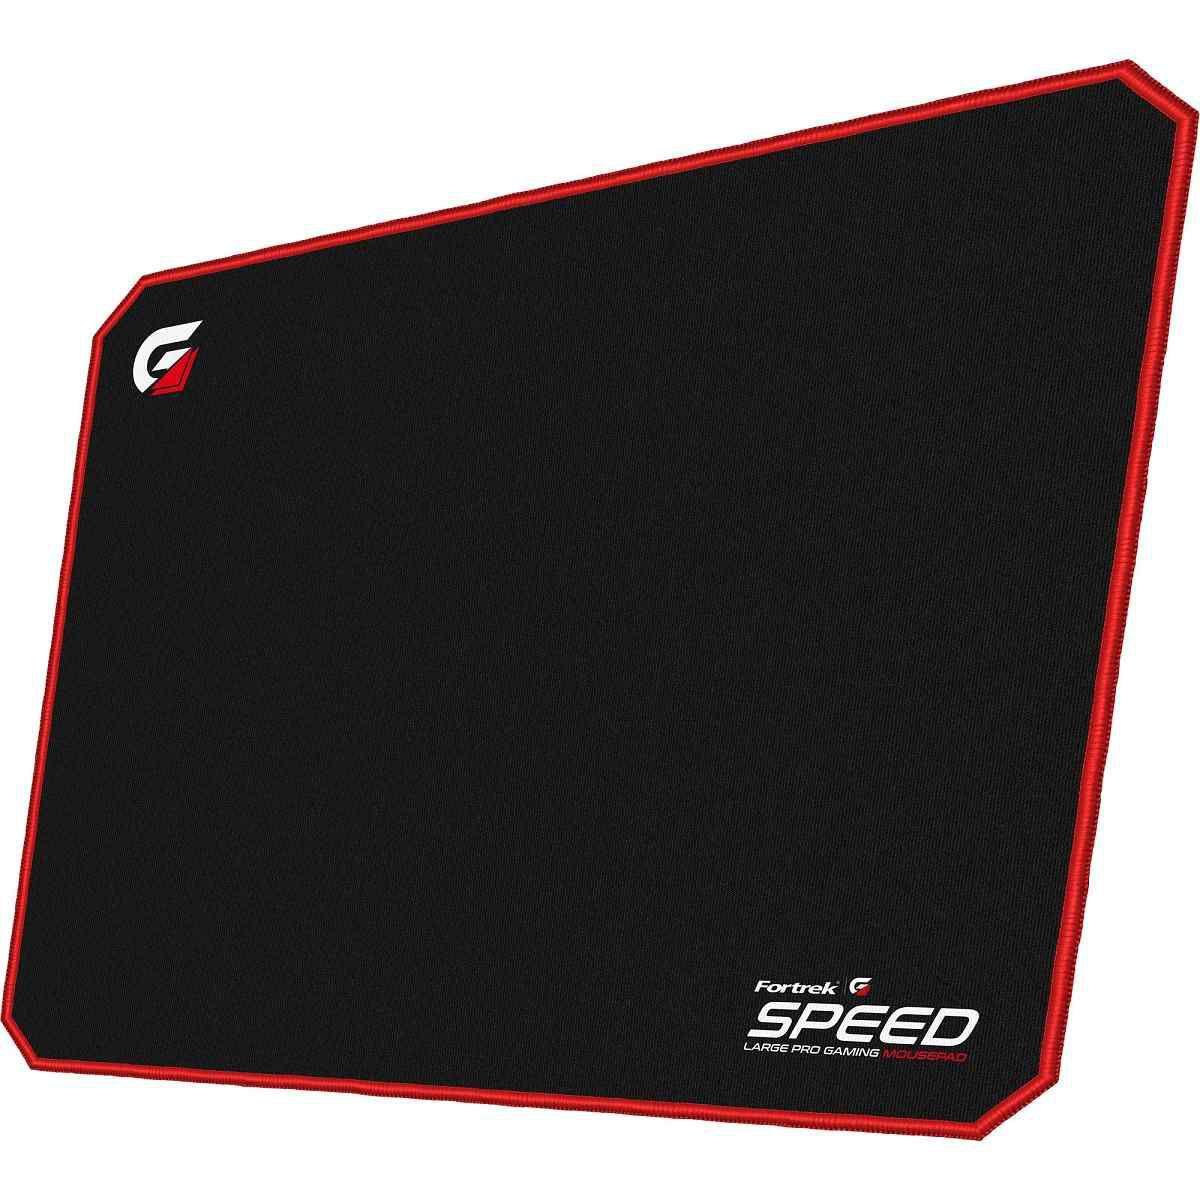 Mouse Pad Gamer Fortrek (320x240mm) SPEED MPG101 Vermelho